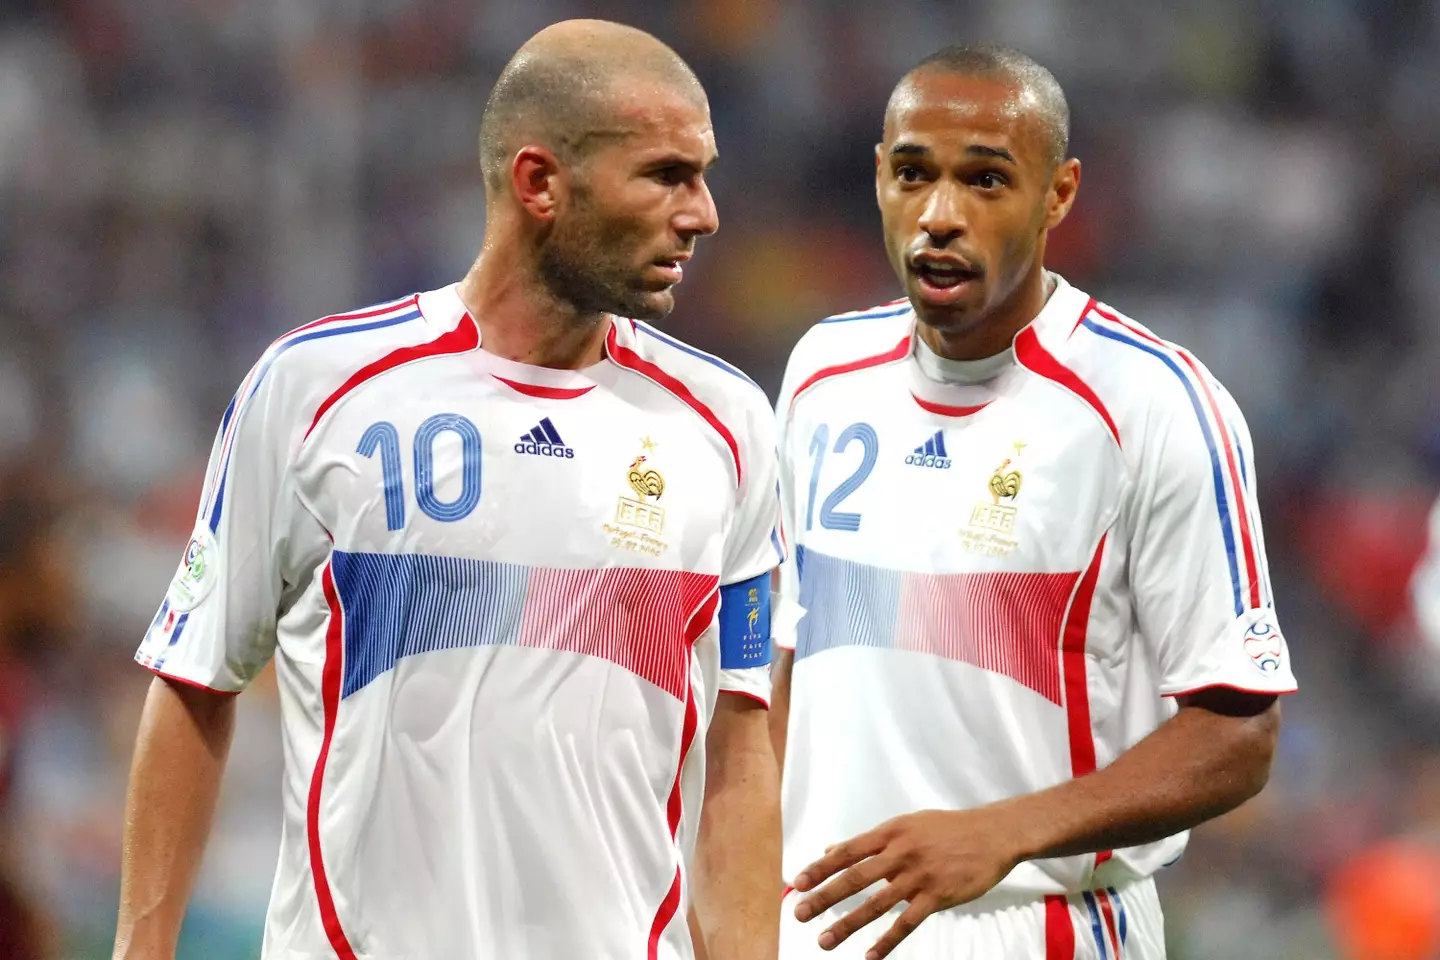 Henry named his former international teammate Zinedine Zidane (Image: PA)